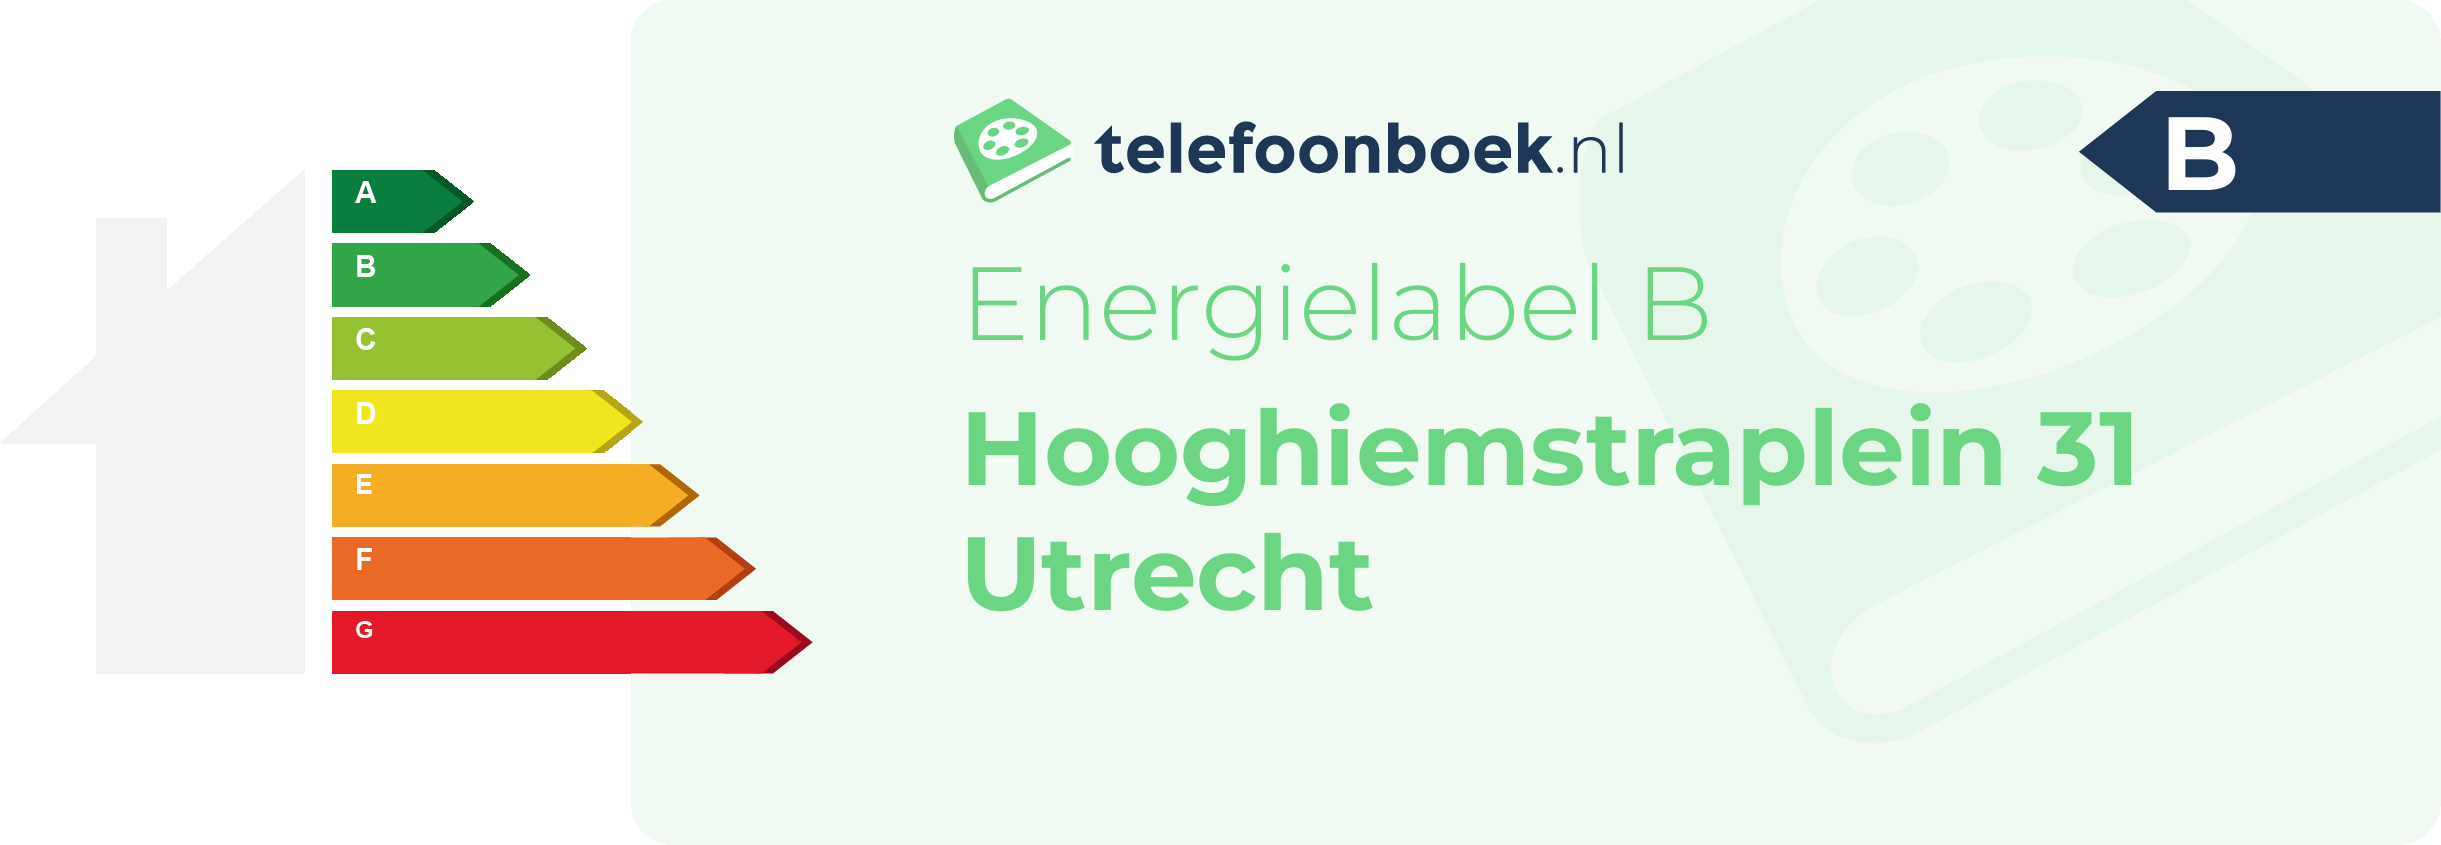 Energielabel Hooghiemstraplein 31 Utrecht